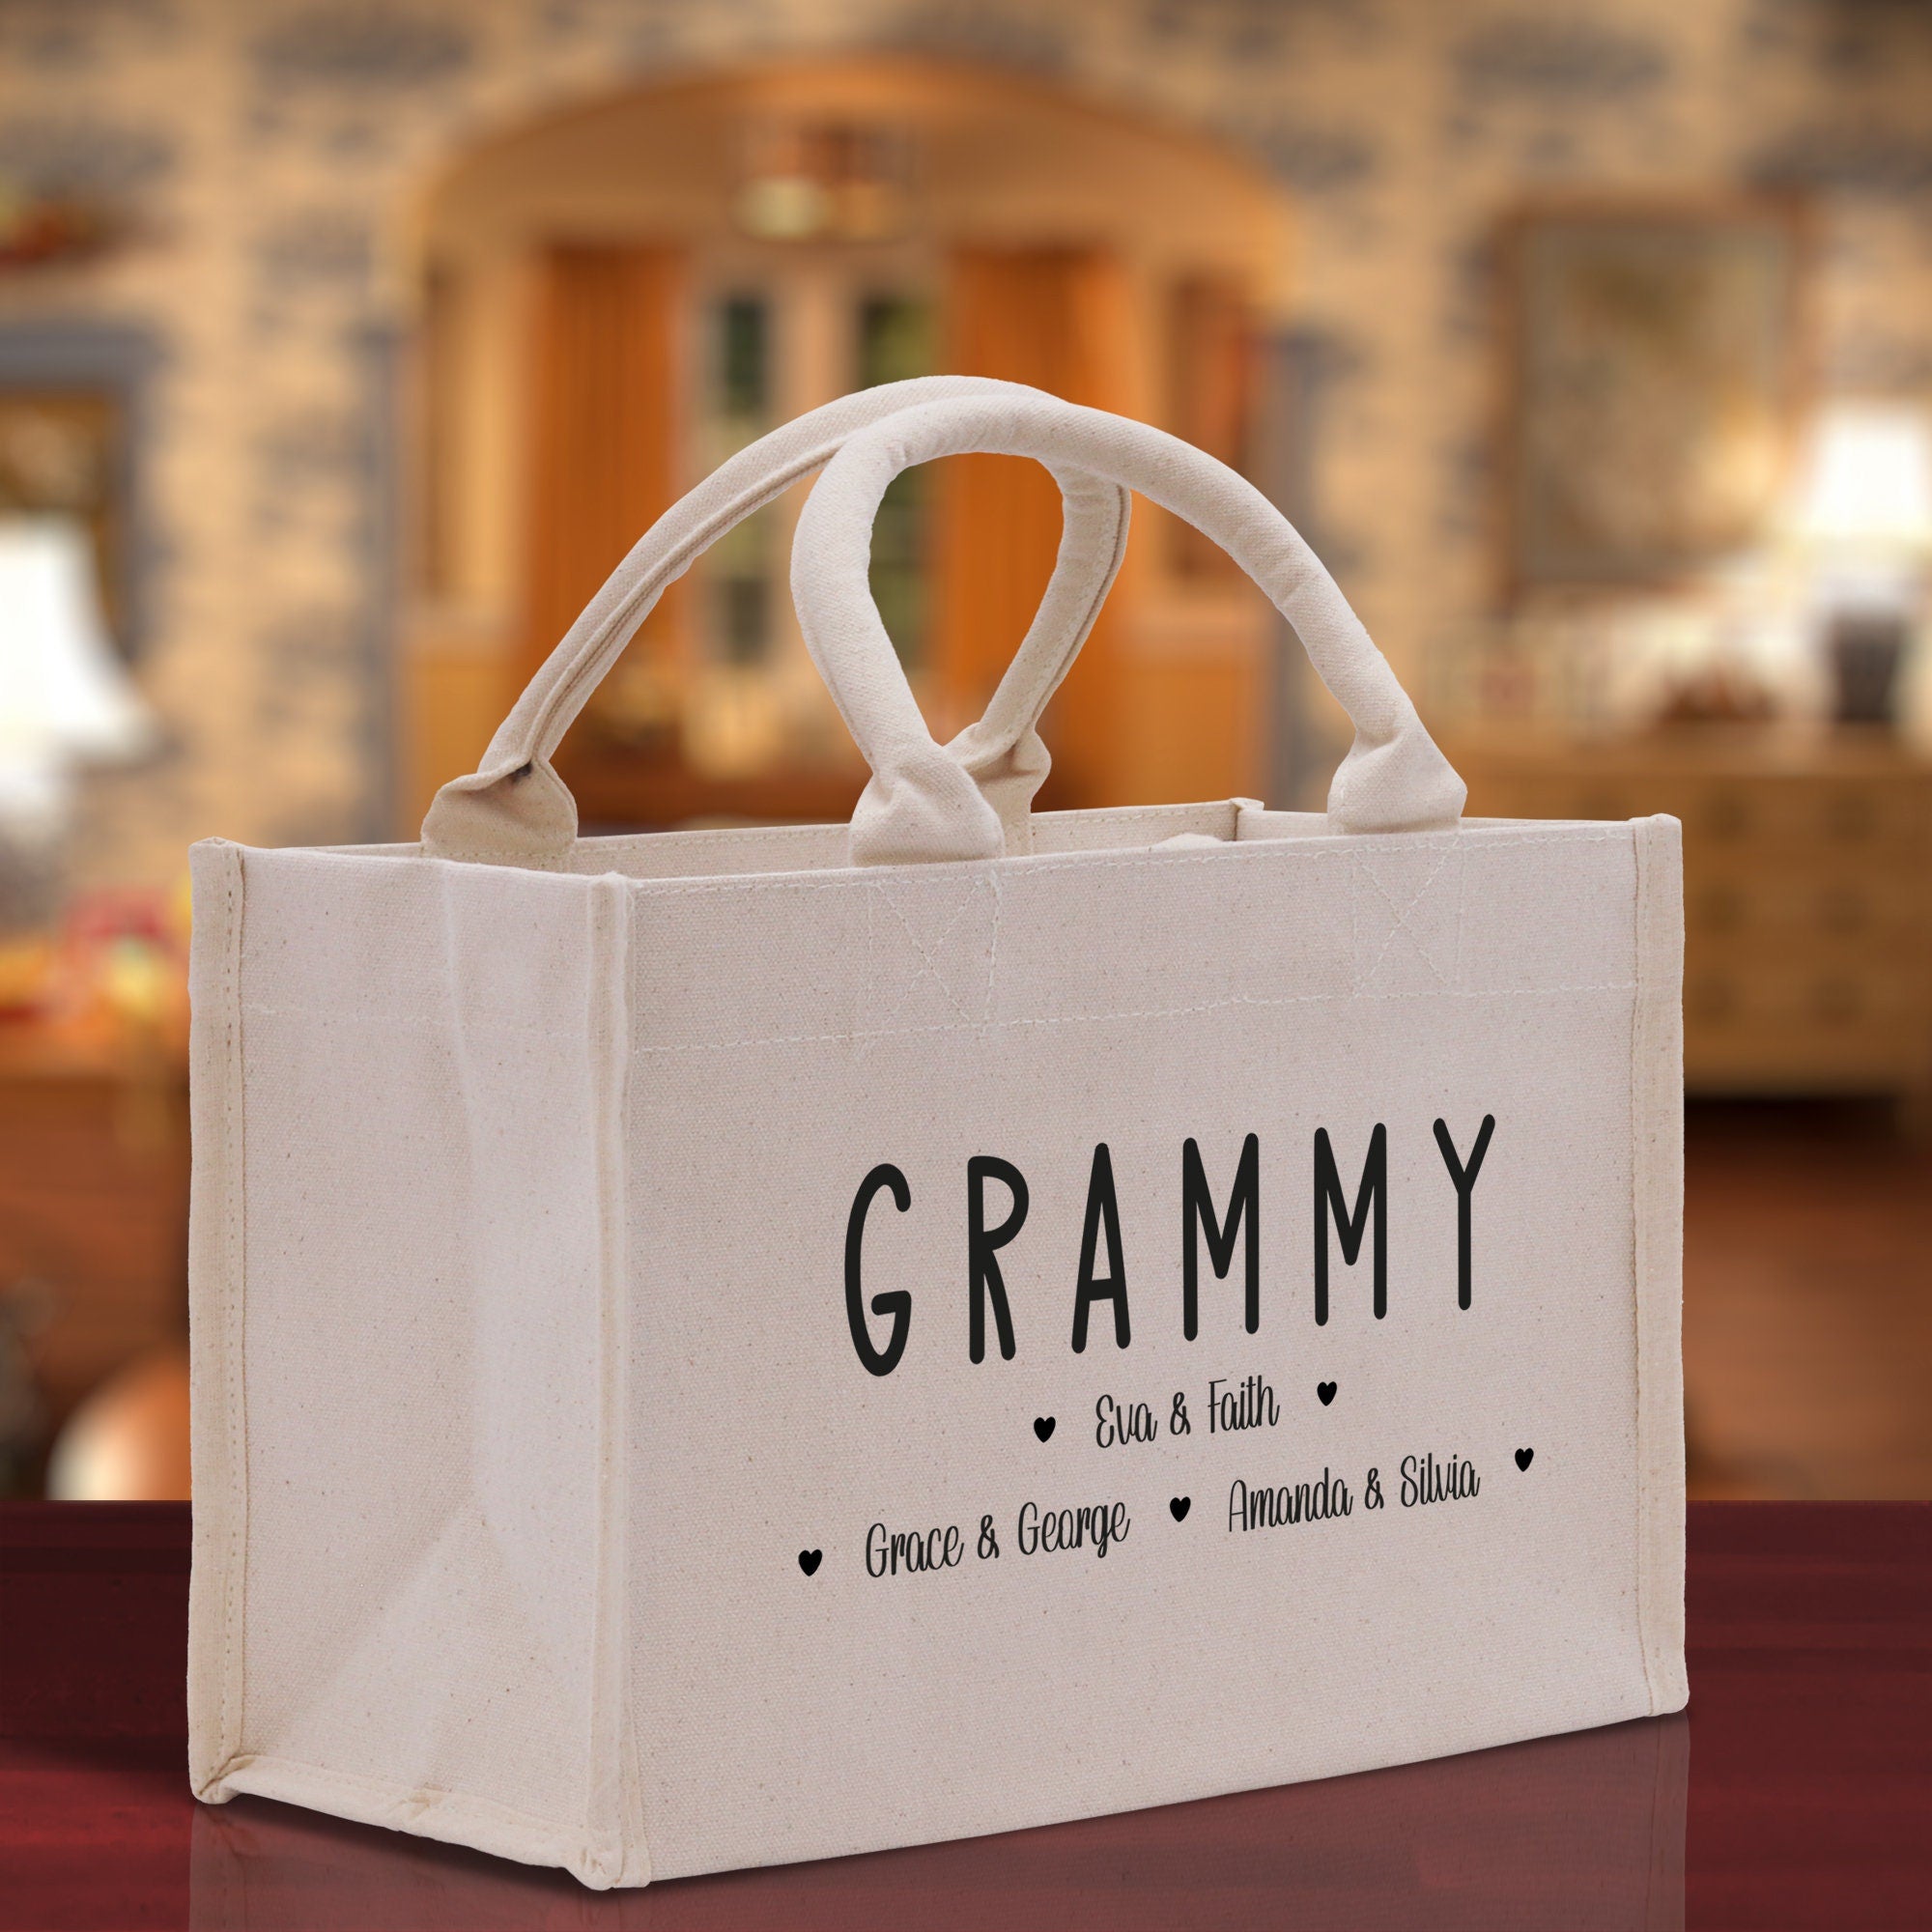 Grammy Grandchild Kids Names Custom Grandma Tote Bag Grandma's Getaway Bag Personalized Grandma Gift Bag Shopping Bag Mother Day Gift